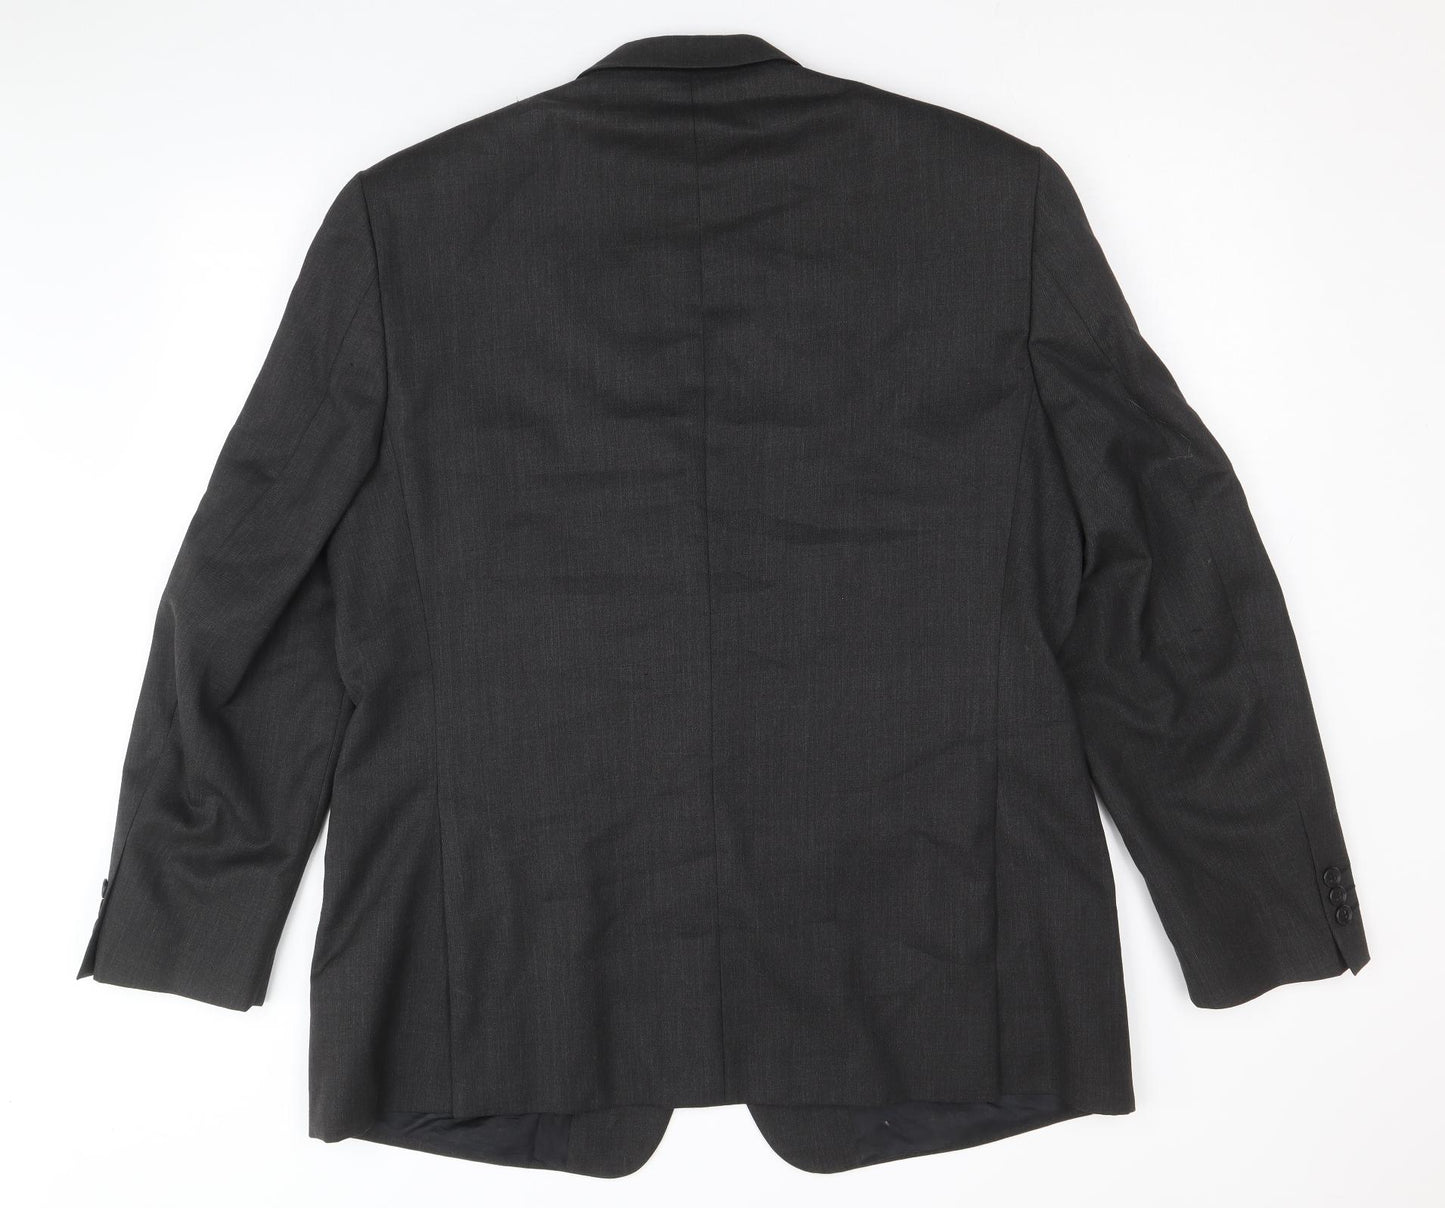 West Brook Mens Grey Wool Jacket Suit Jacket Size 44 Regular